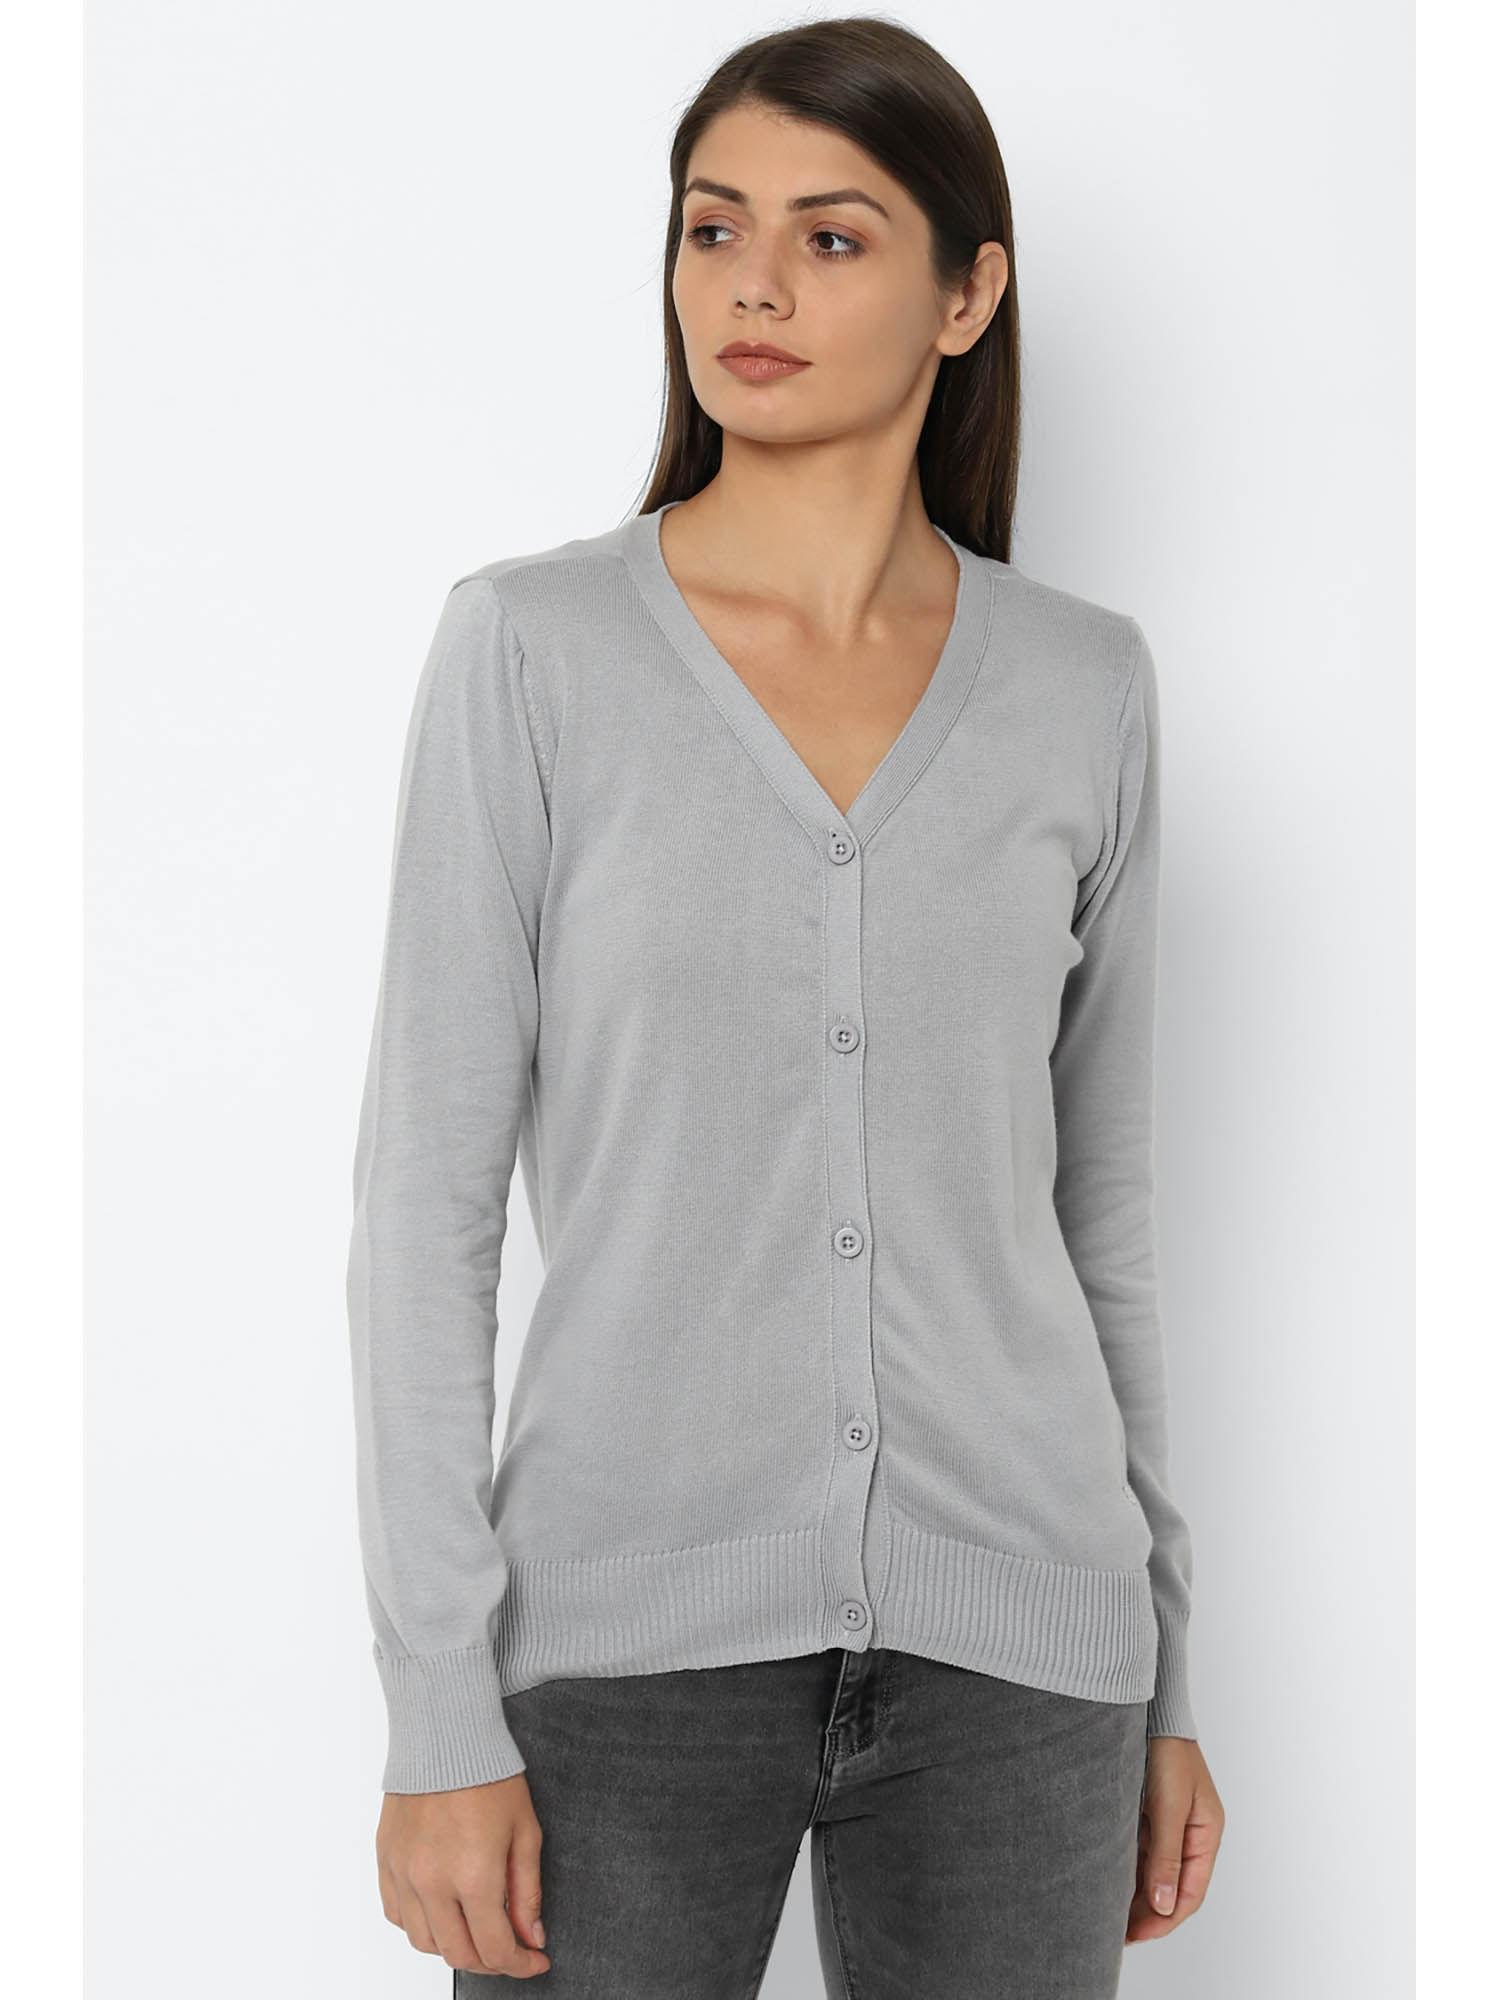 women grey solid v neck casual cardigan